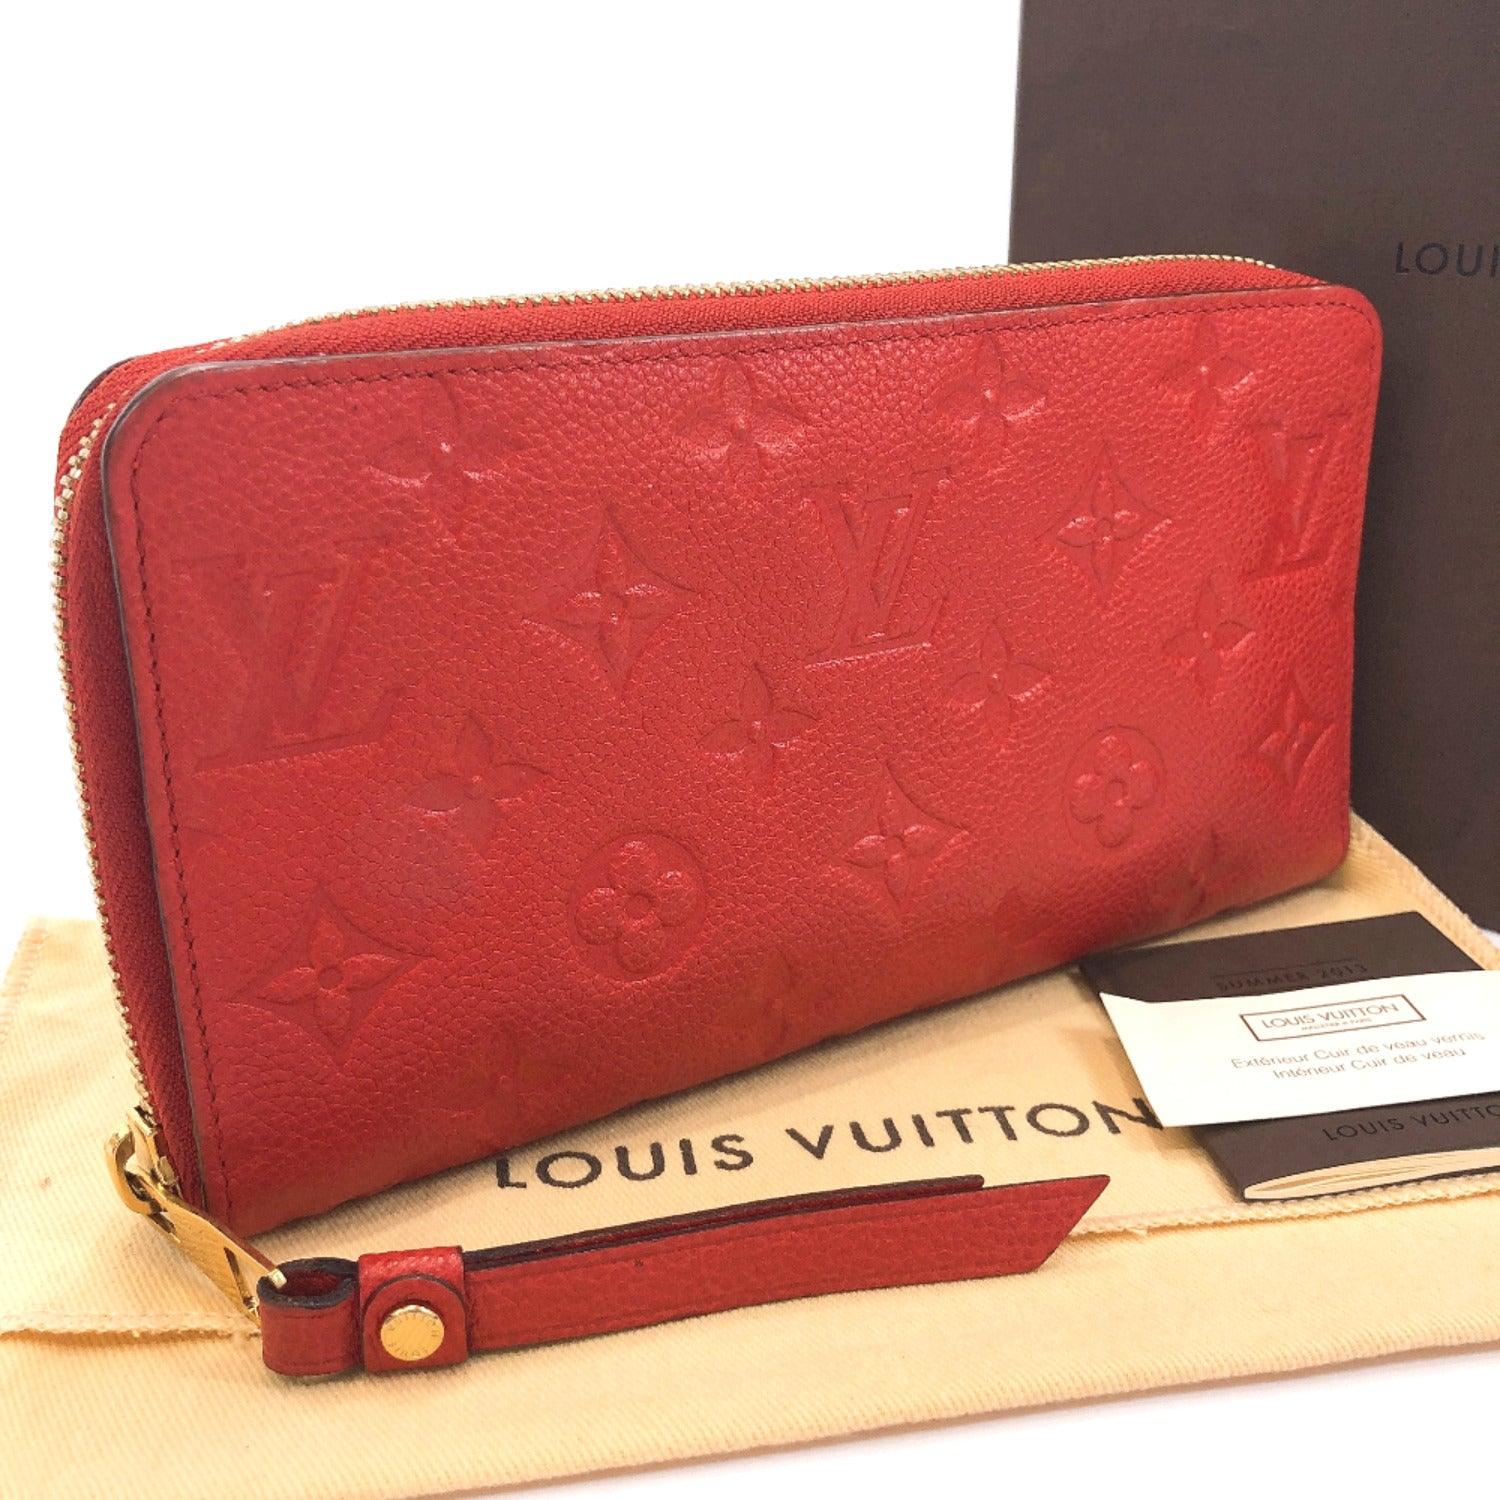 Shop Louis Vuitton MONOGRAM EMPREINTE Unisex Soft Type Luggage